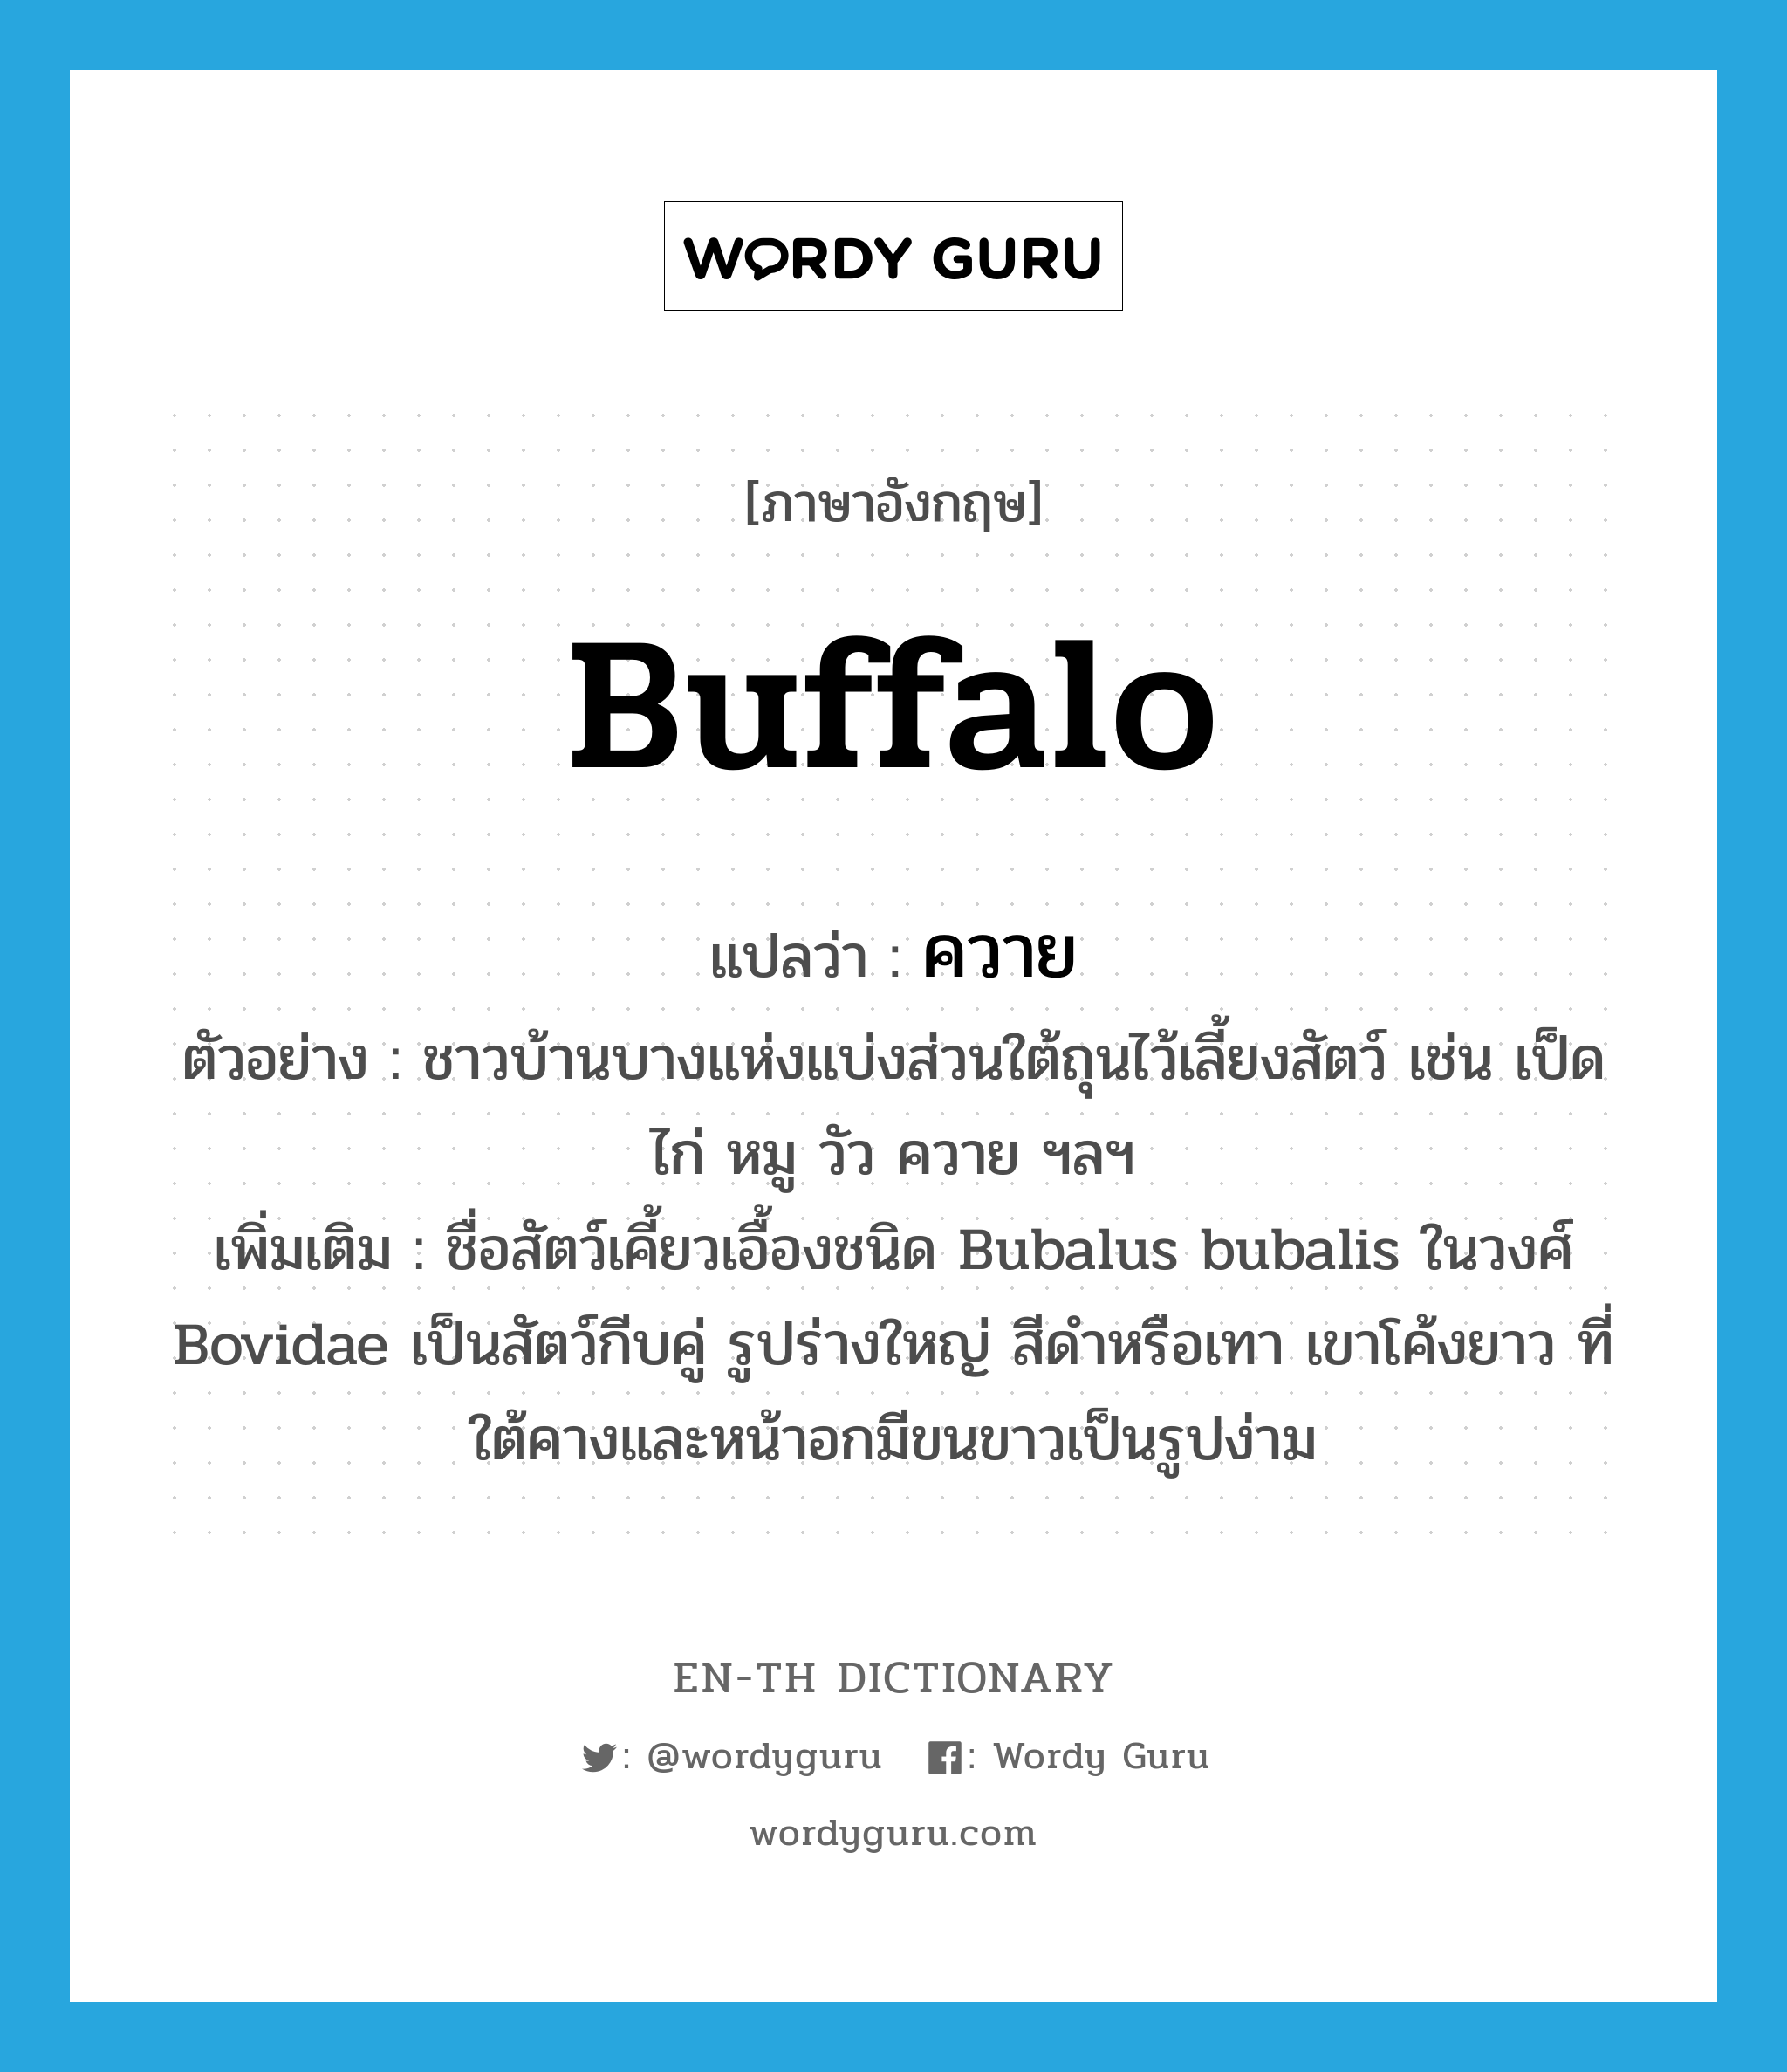 buffalo แปลว่า?, คำศัพท์ภาษาอังกฤษ buffalo แปลว่า ควาย ประเภท N ตัวอย่าง ชาวบ้านบางแห่งแบ่งส่วนใต้ถุนไว้เลี้ยงสัตว์ เช่น เป็ด ไก่ หมู วัว ควาย ฯลฯ เพิ่มเติม ชื่อสัตว์เคี้ยวเอื้องชนิด Bubalus bubalis ในวงศ์ Bovidae เป็นสัตว์กีบคู่ รูปร่างใหญ่ สีดำหรือเทา เขาโค้งยาว ที่ใต้คางและหน้าอกมีขนขาวเป็นรูปง่าม หมวด N